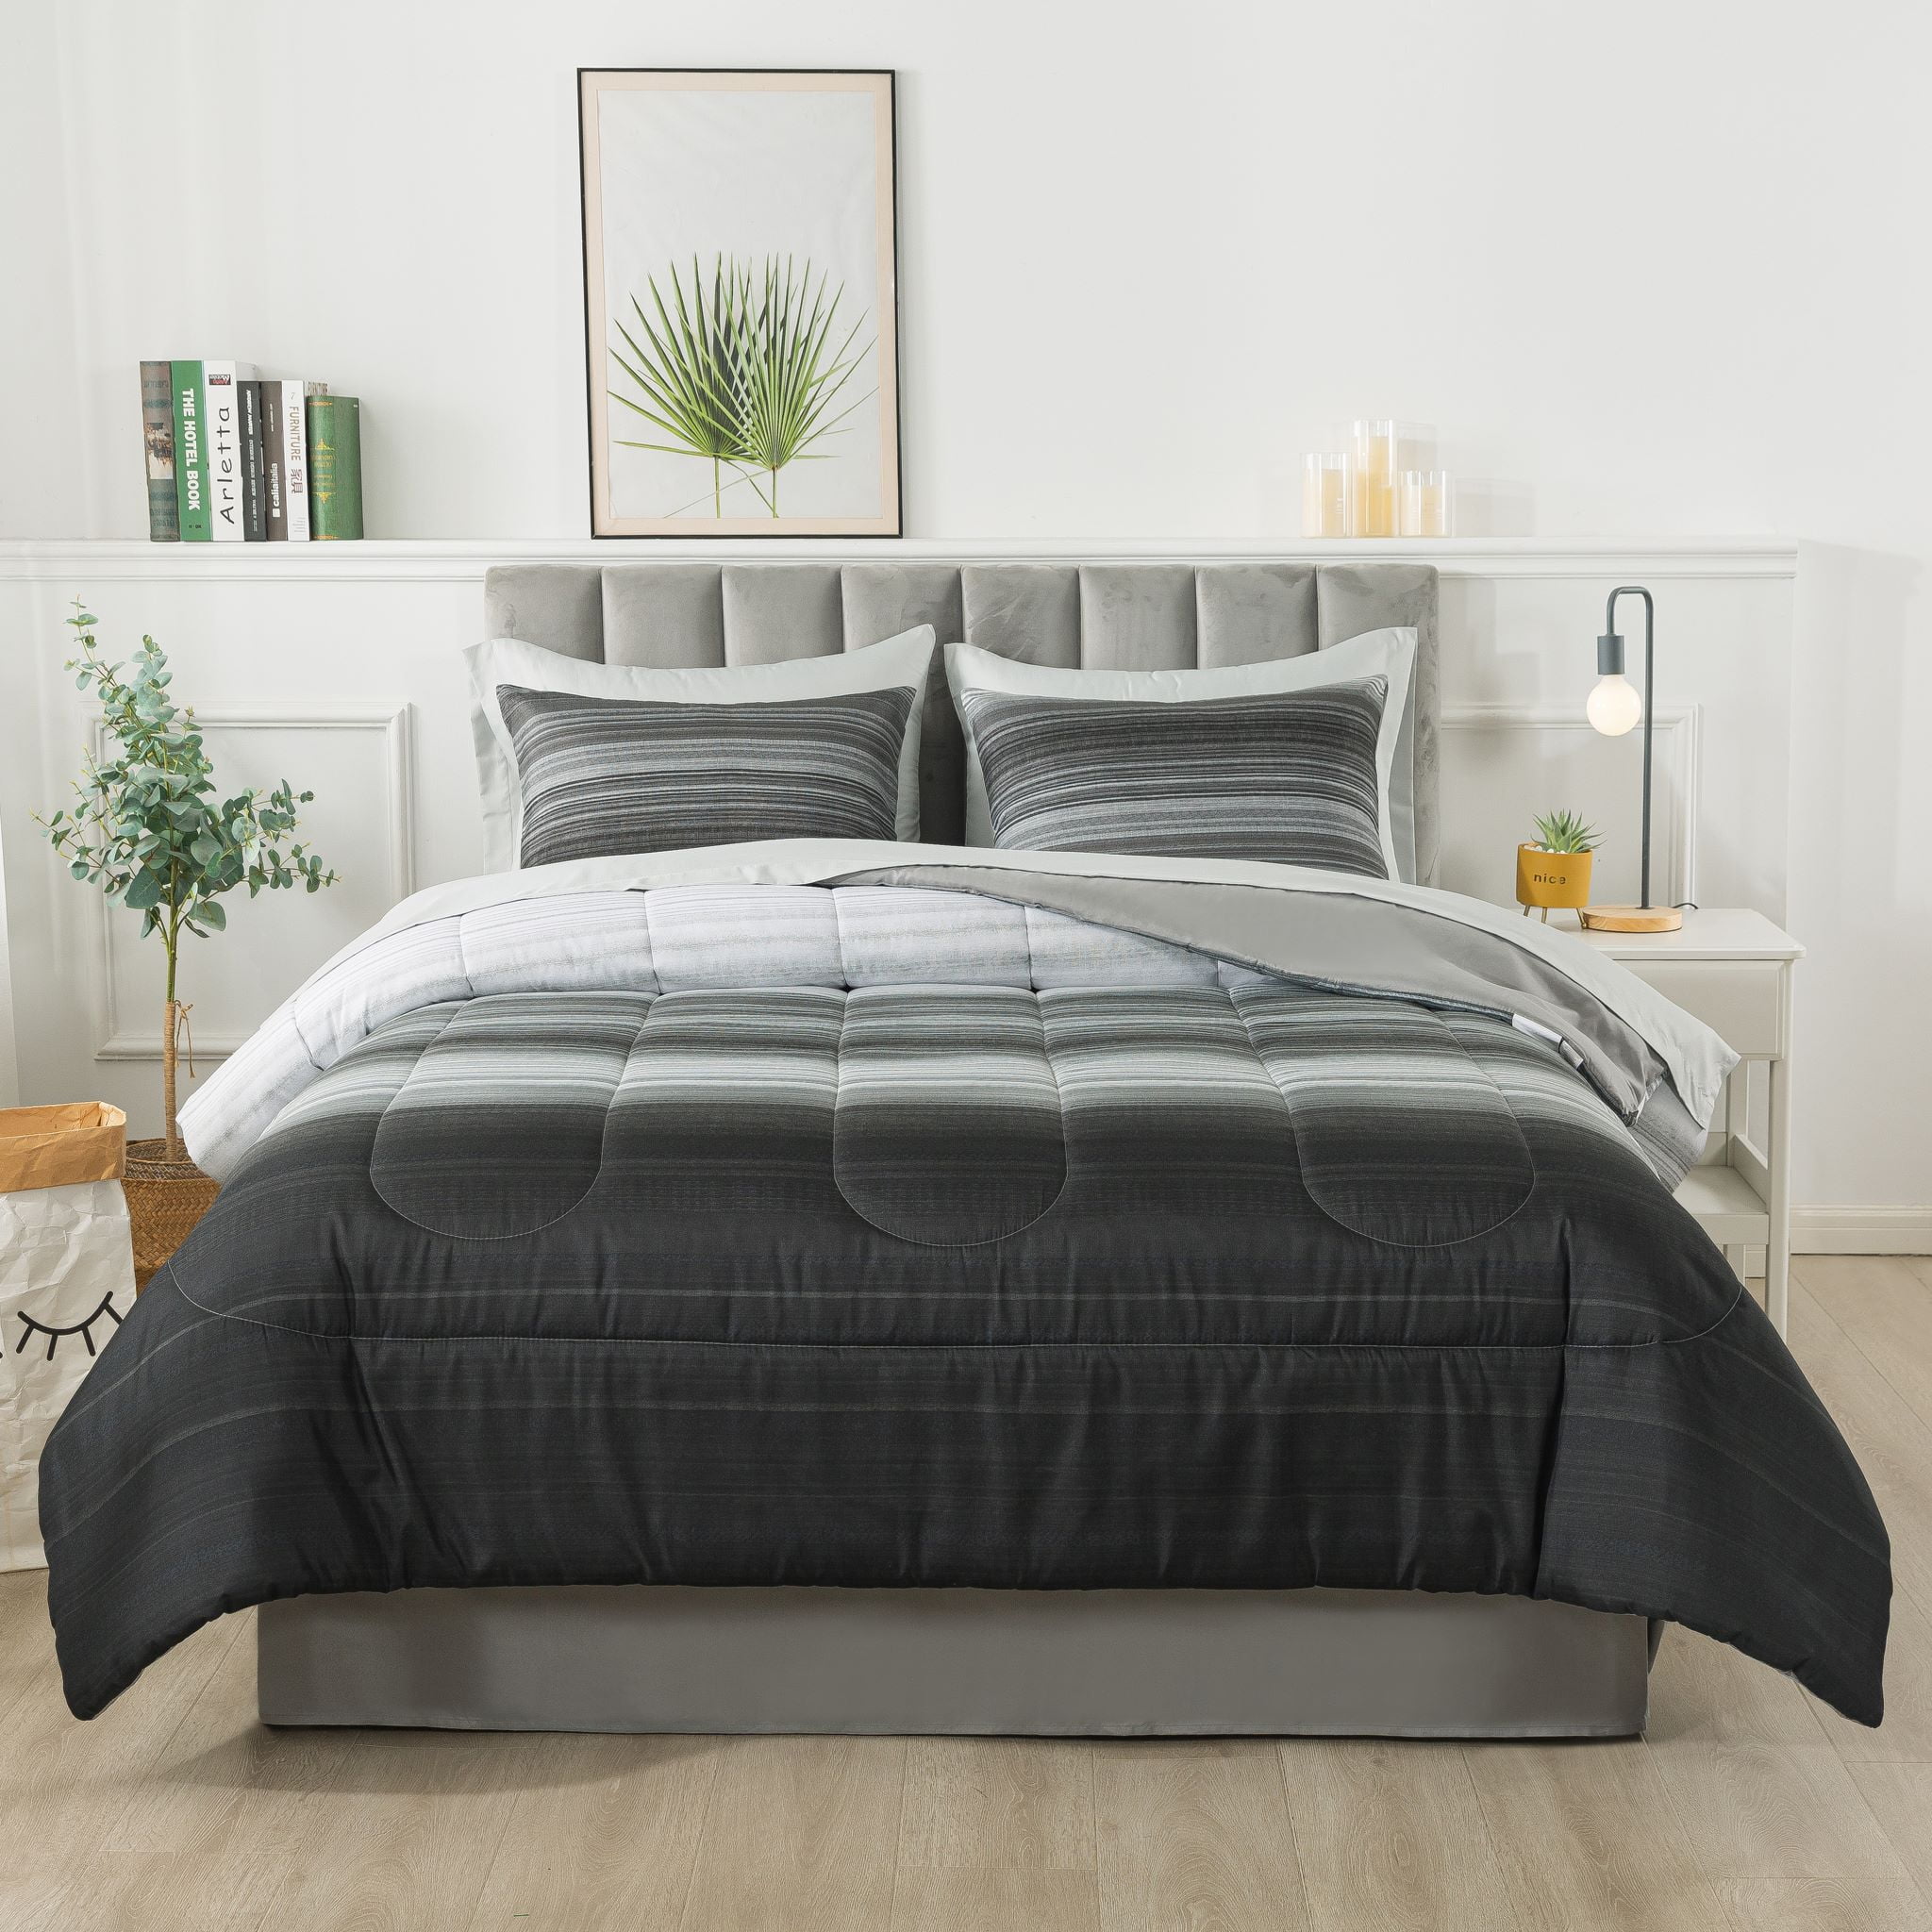 Mainstays Queen 9 Piece Complete Bedding Set Stripe/Navy or Stripe/Grey NEW 